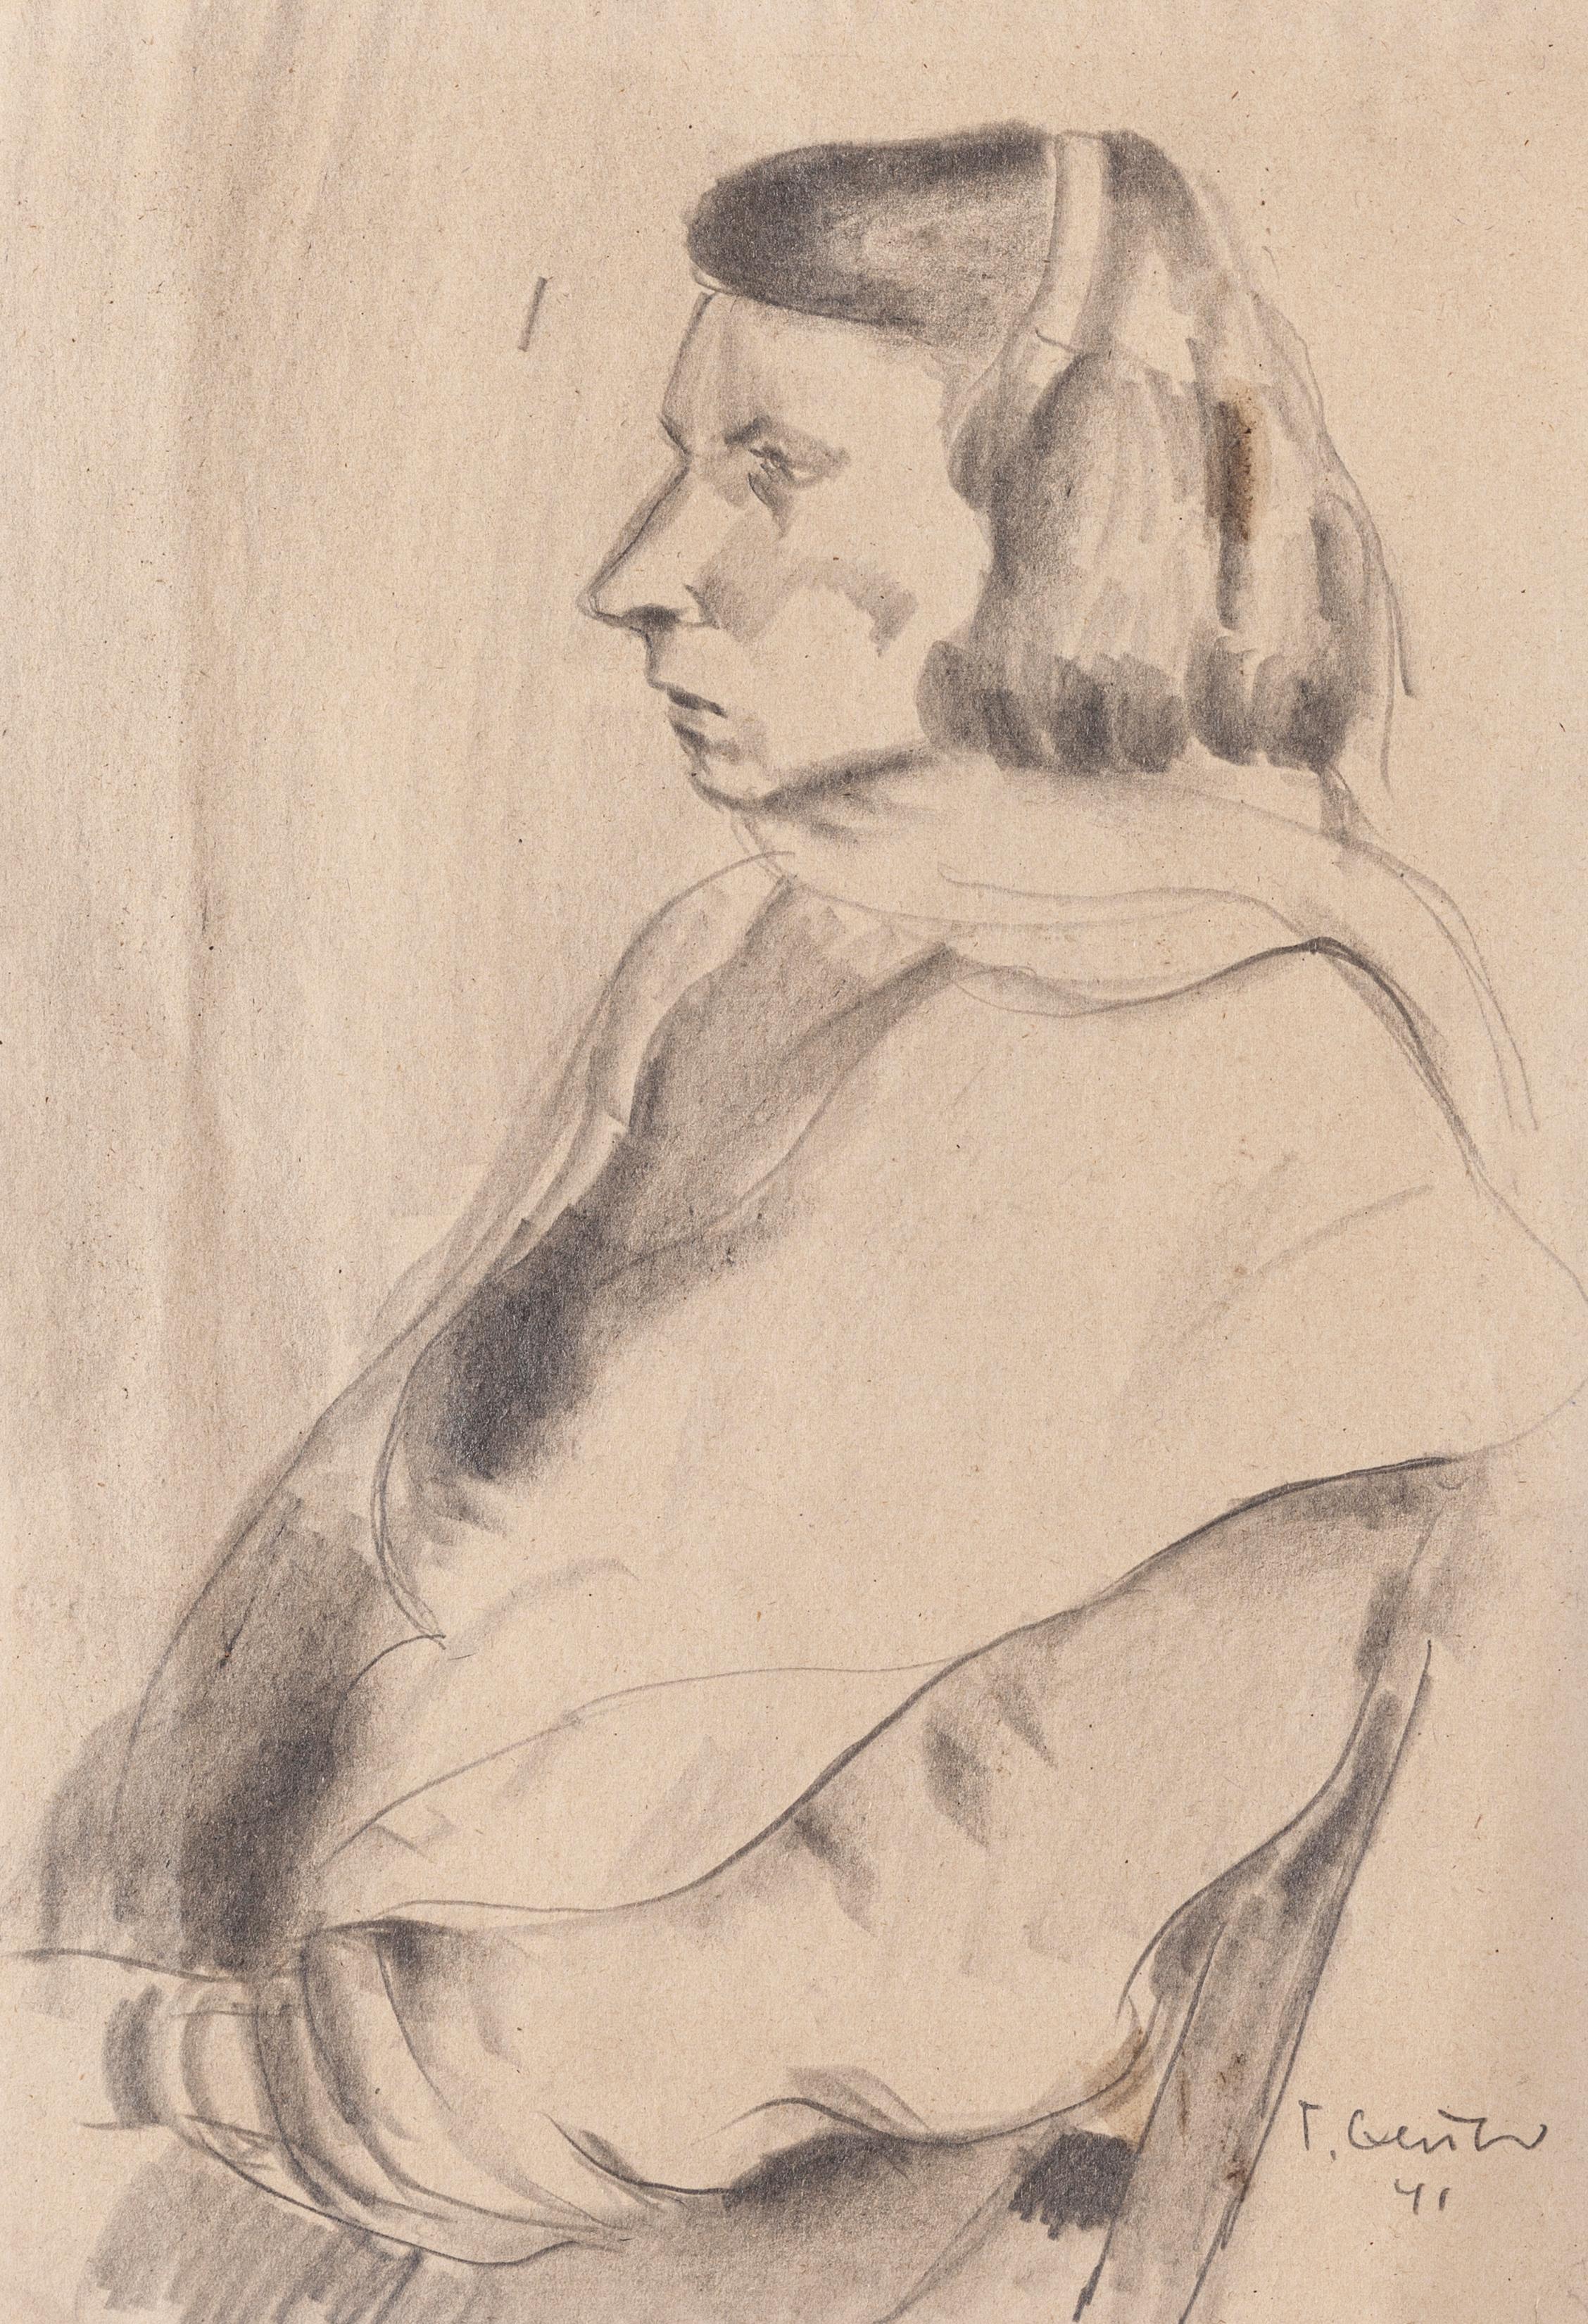 Portrait - Original Pencil Drawing by T. Gertner - 1941